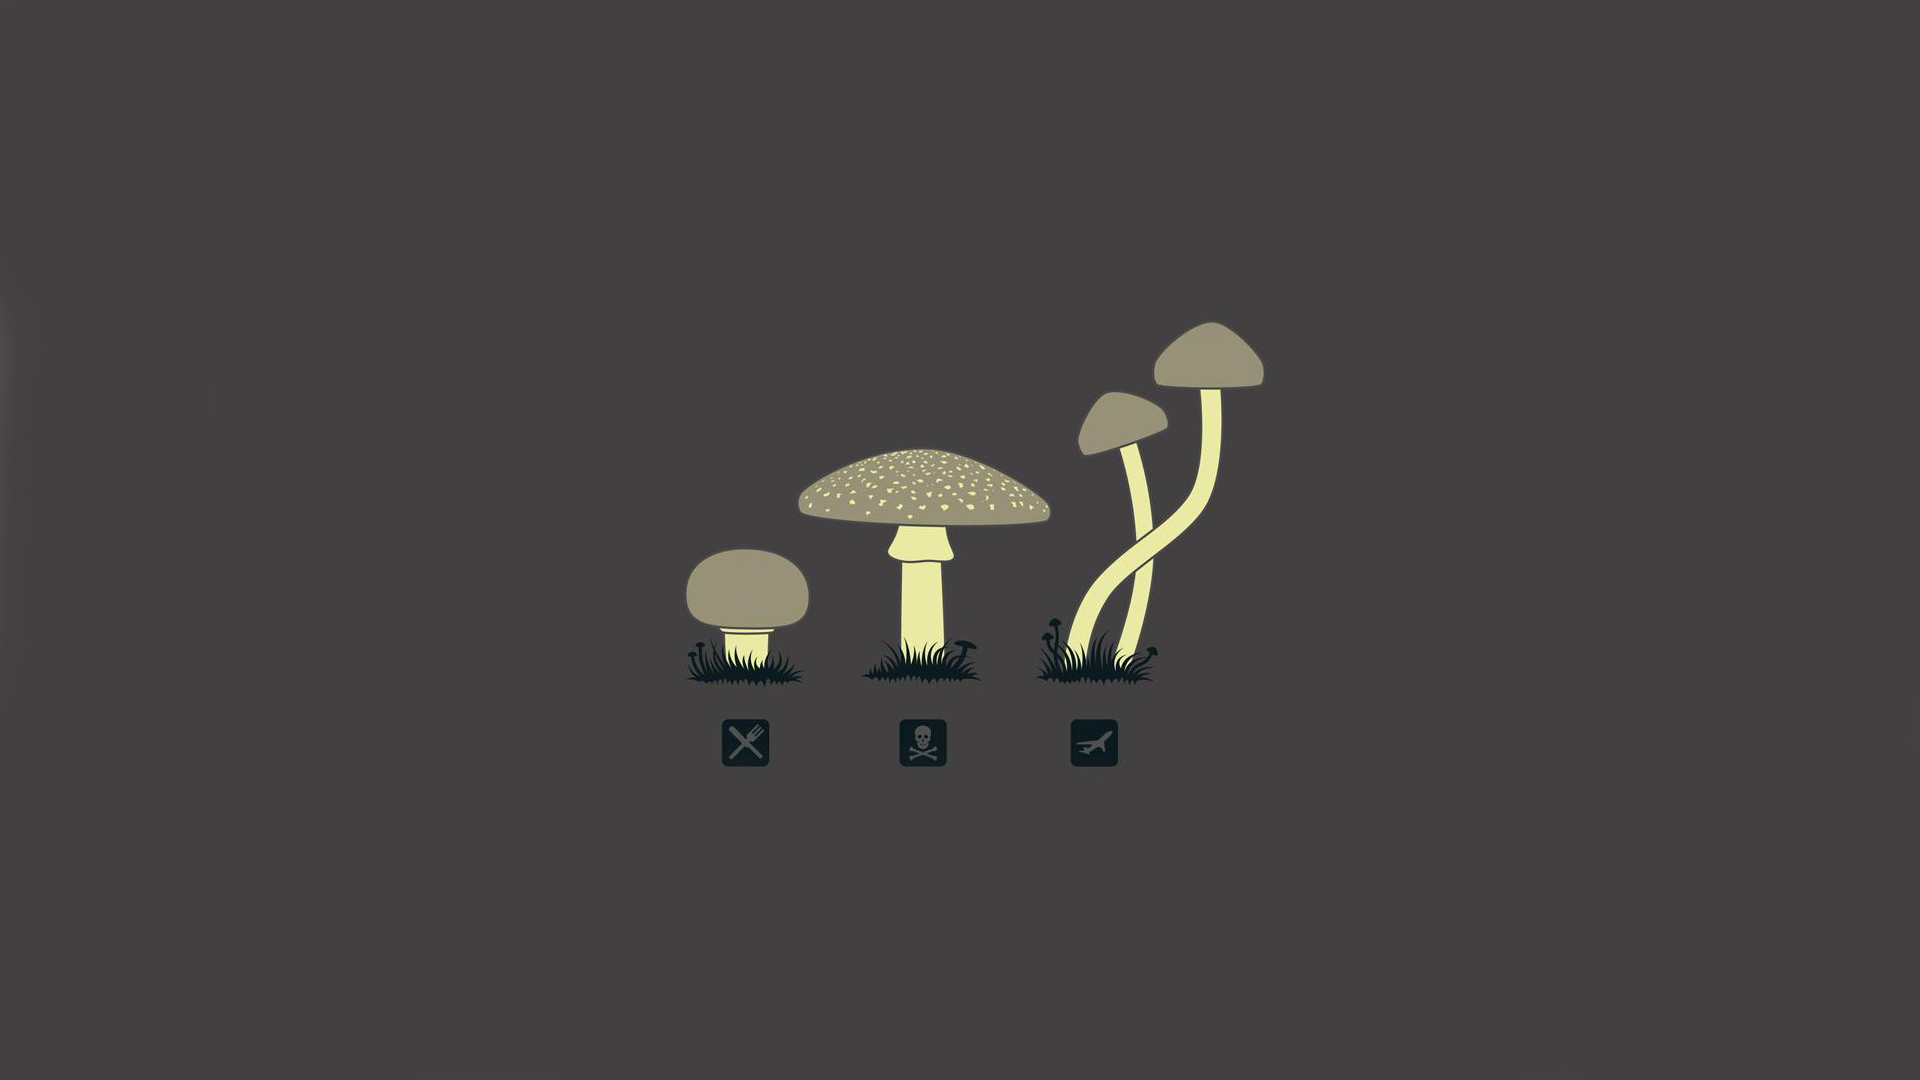 General 1920x1080 mushroom drugs minimalism plants simple background humor gray background gray skull and bones